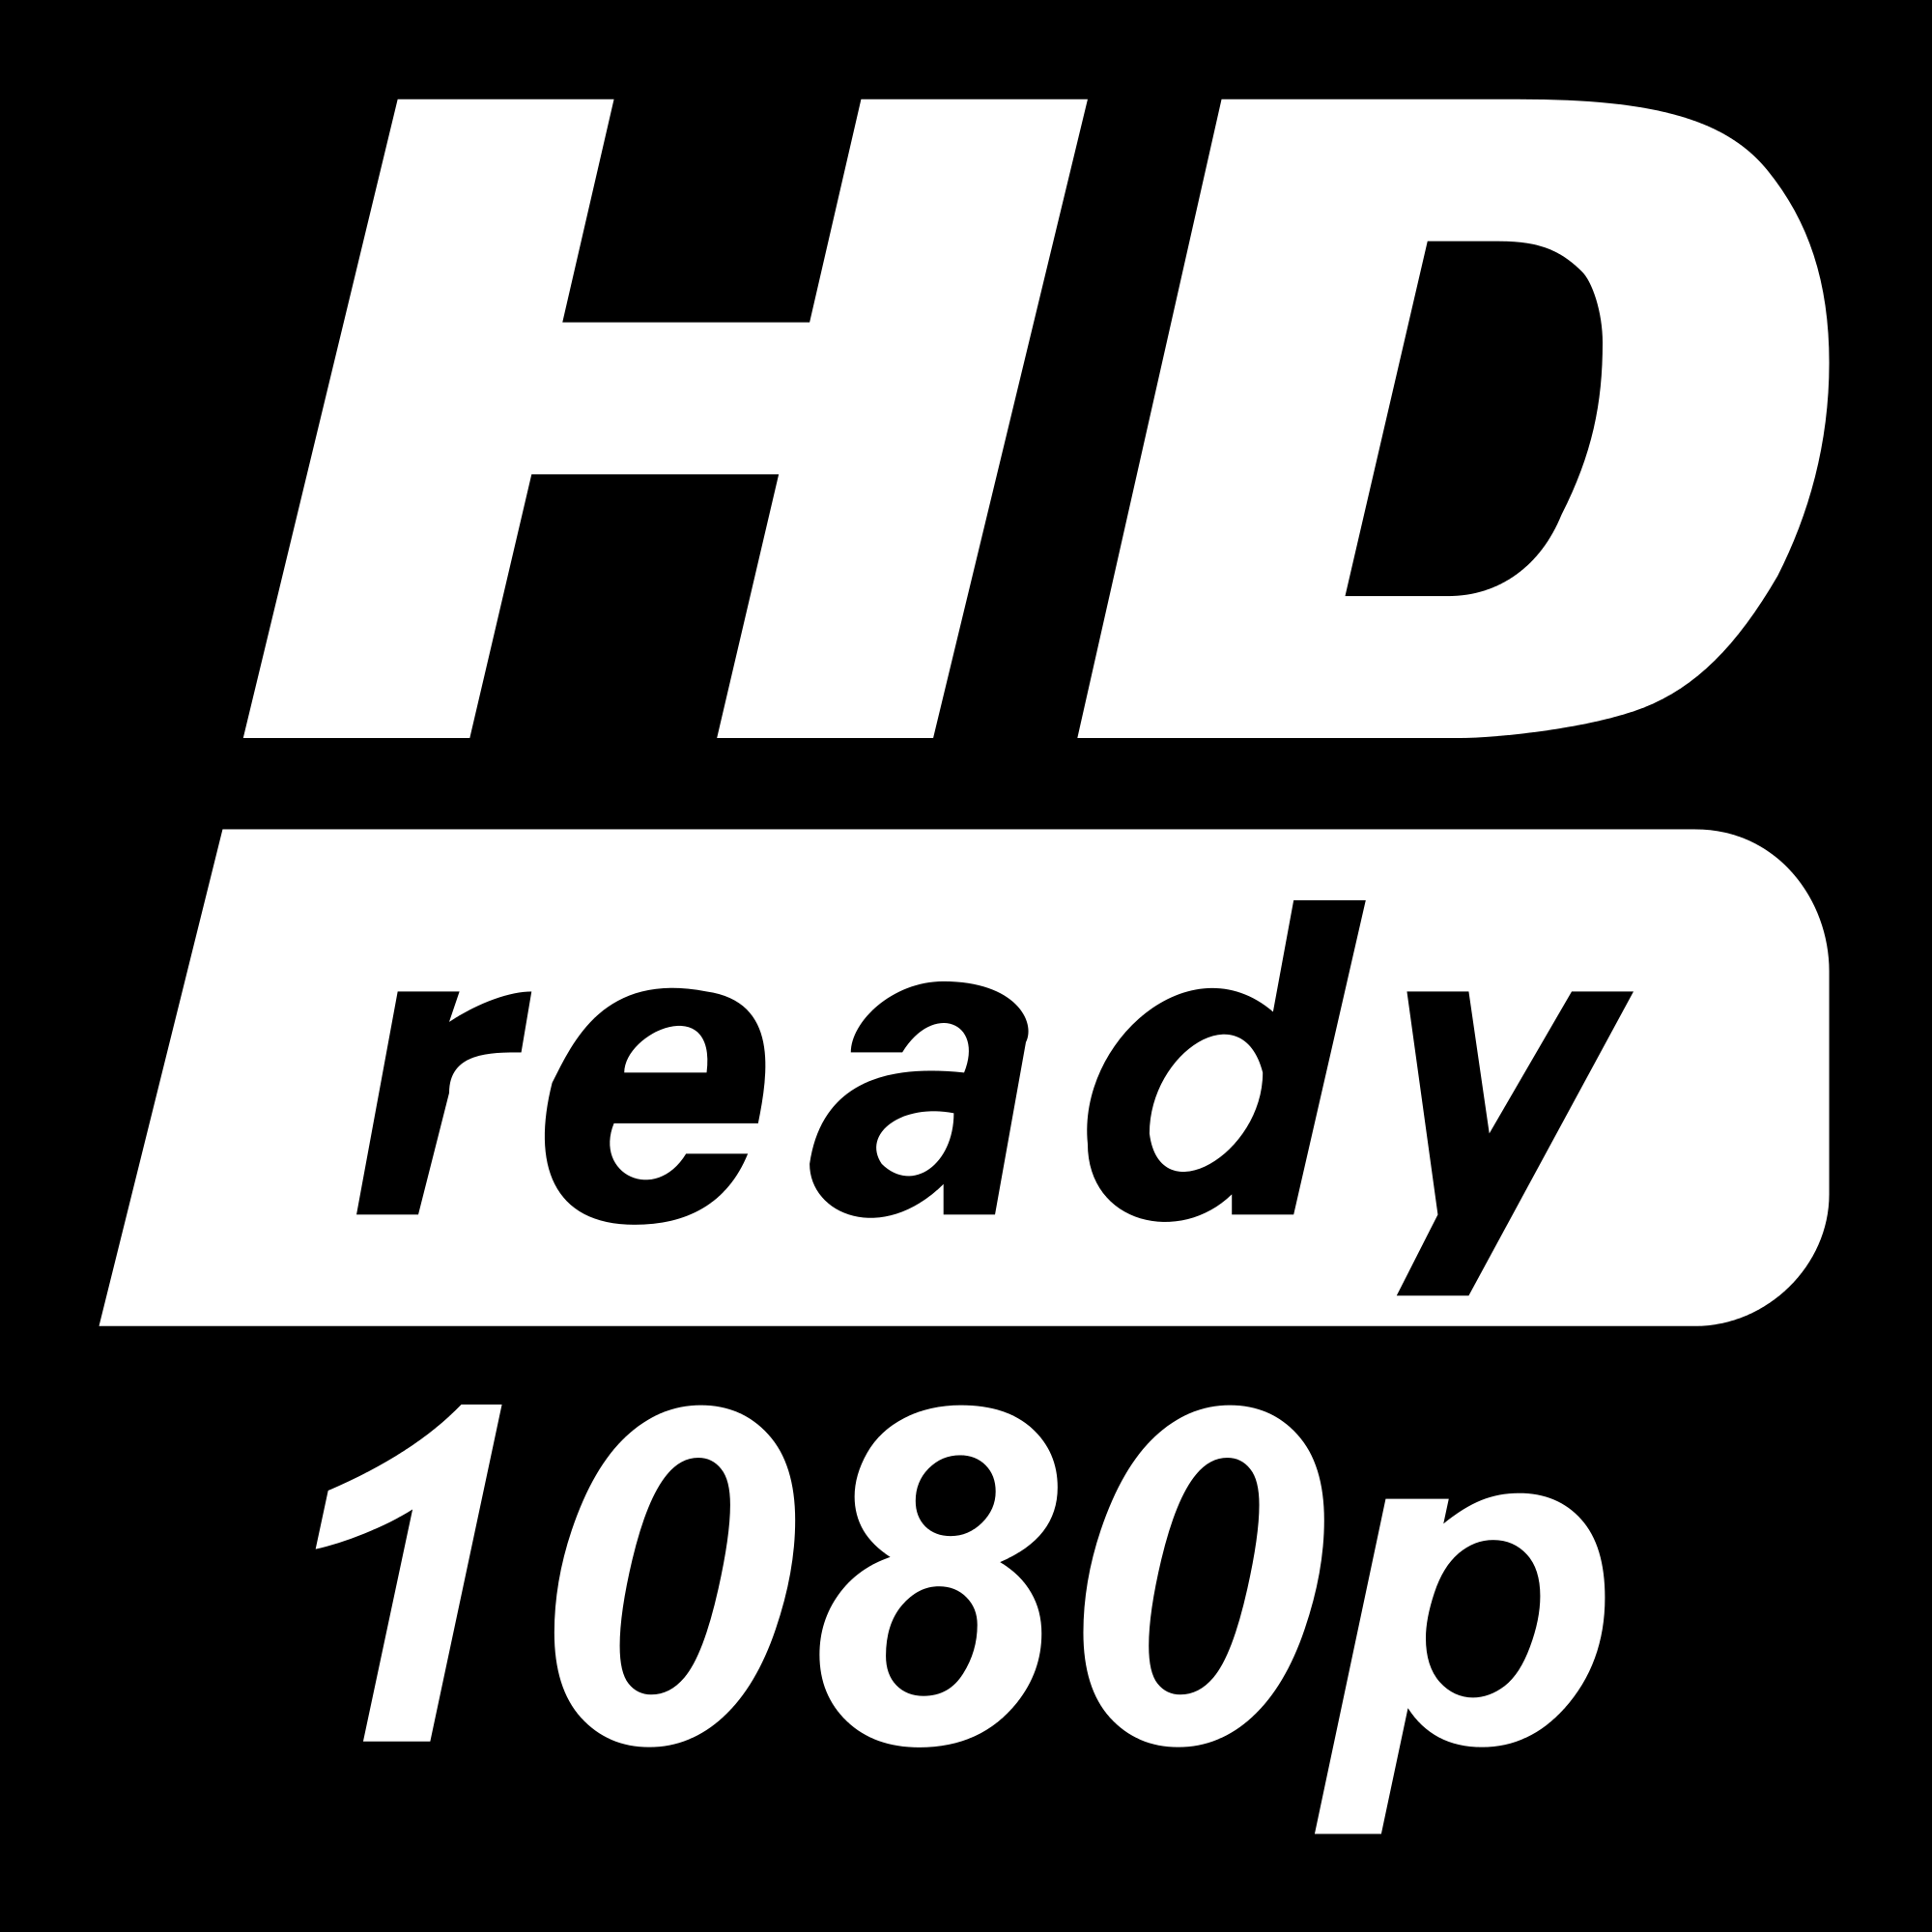 1080P Logo - File:HD ready 1080p logo.svg - Wikimedia Commons